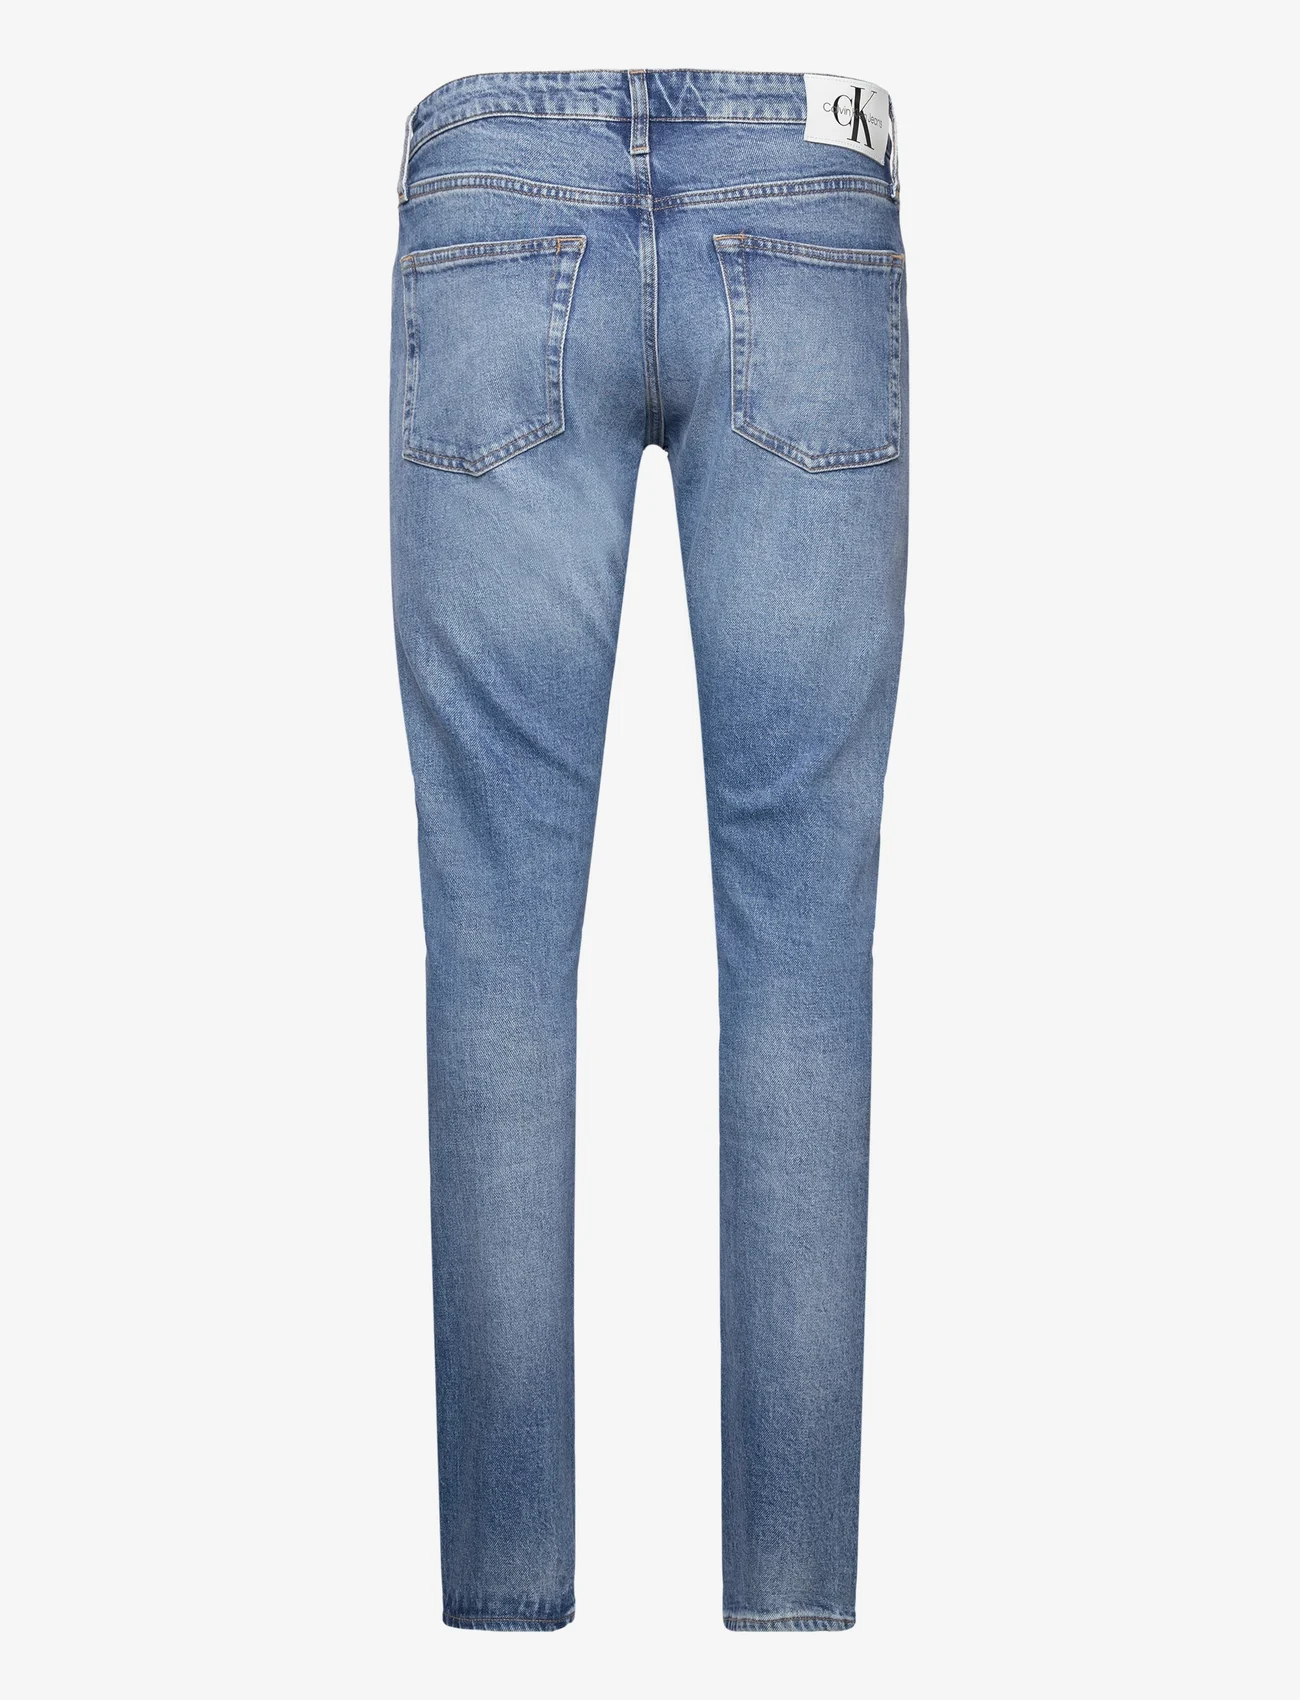 Calvin Klein Jeans - SLIM - slim jeans - denim light - 1